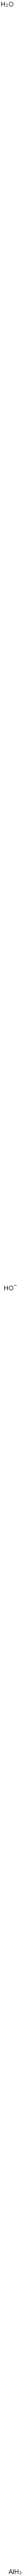 Aluminum oxide hydroxide|